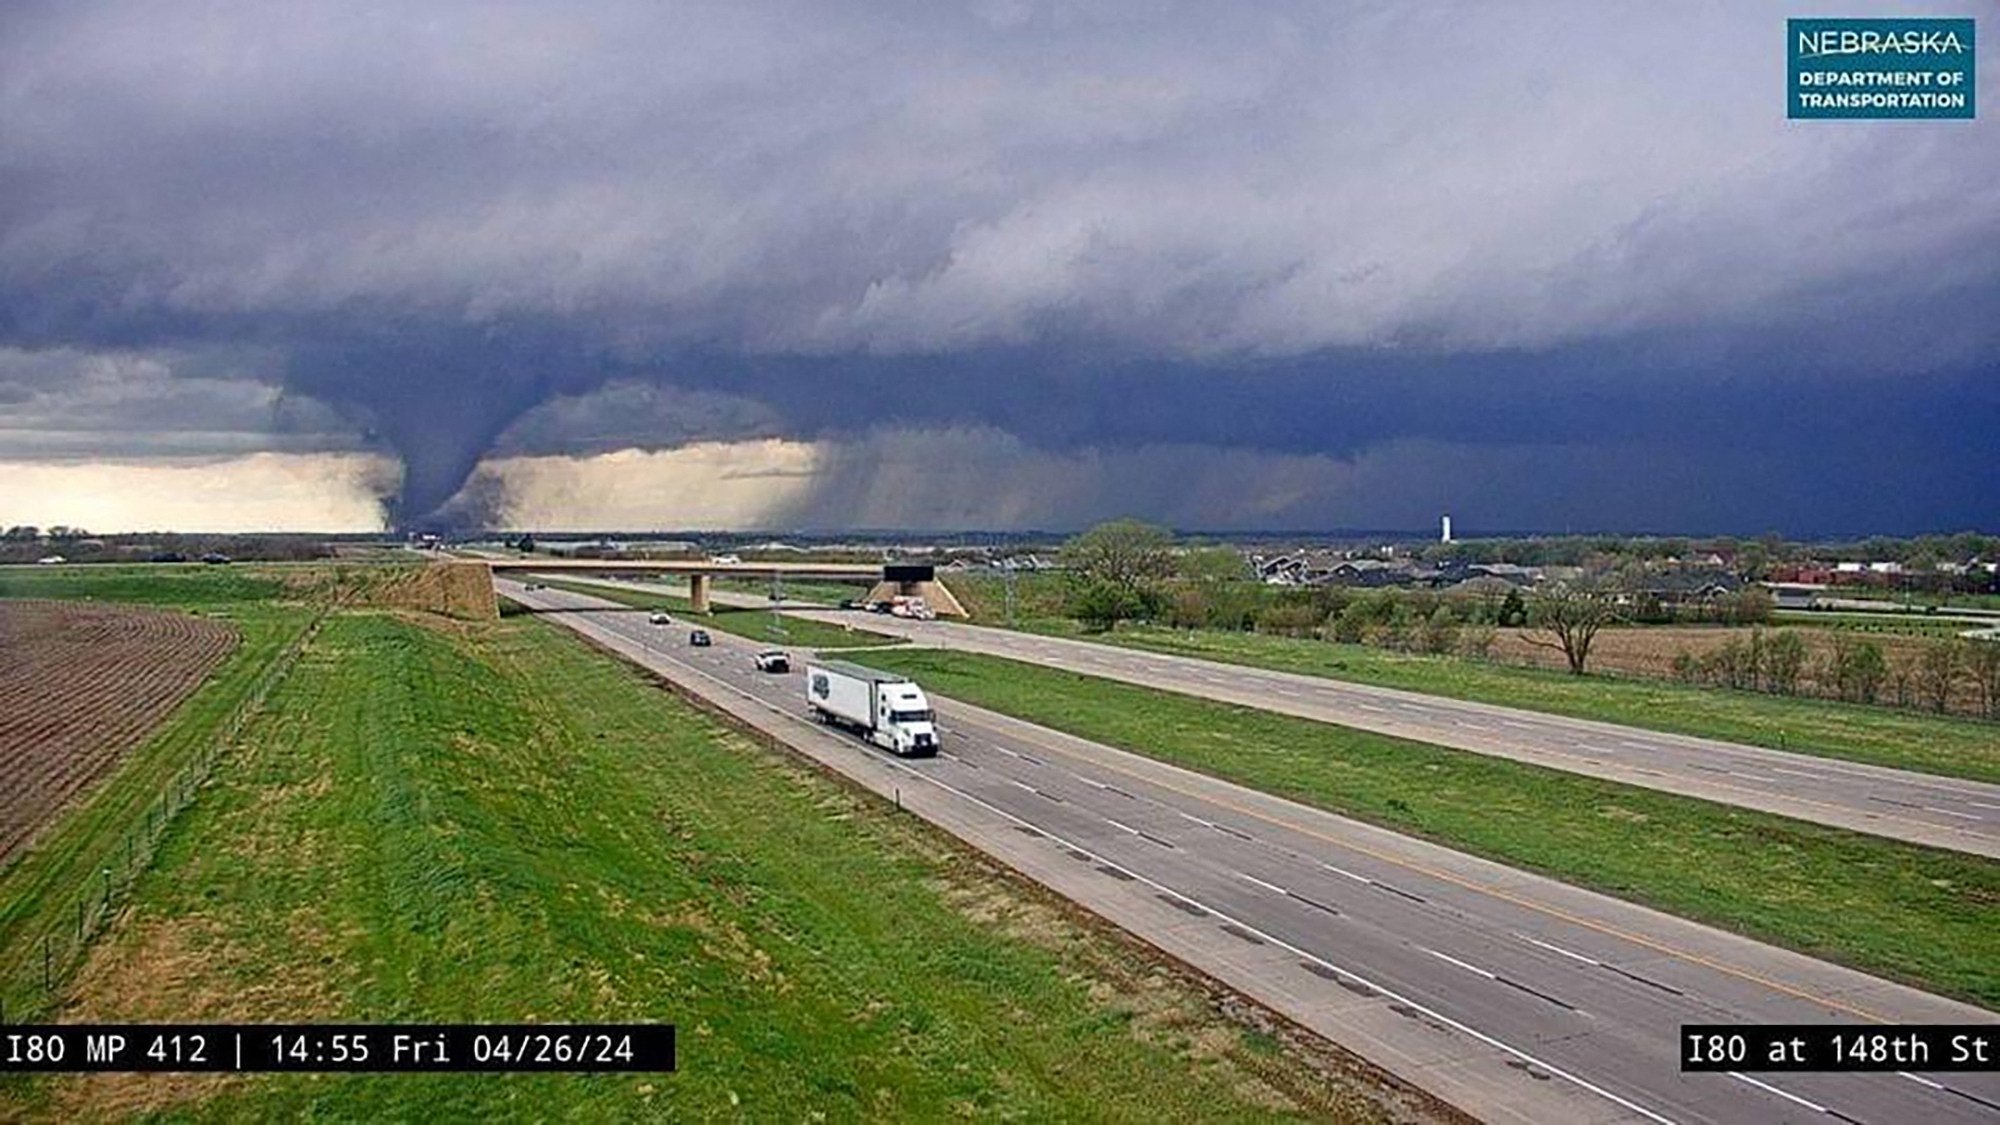 A tornado crossing Interstate Highway 80 near Waverly, Nebraska, on April 26, 2024. Photo: Nebraska Department of Transportation/AFP